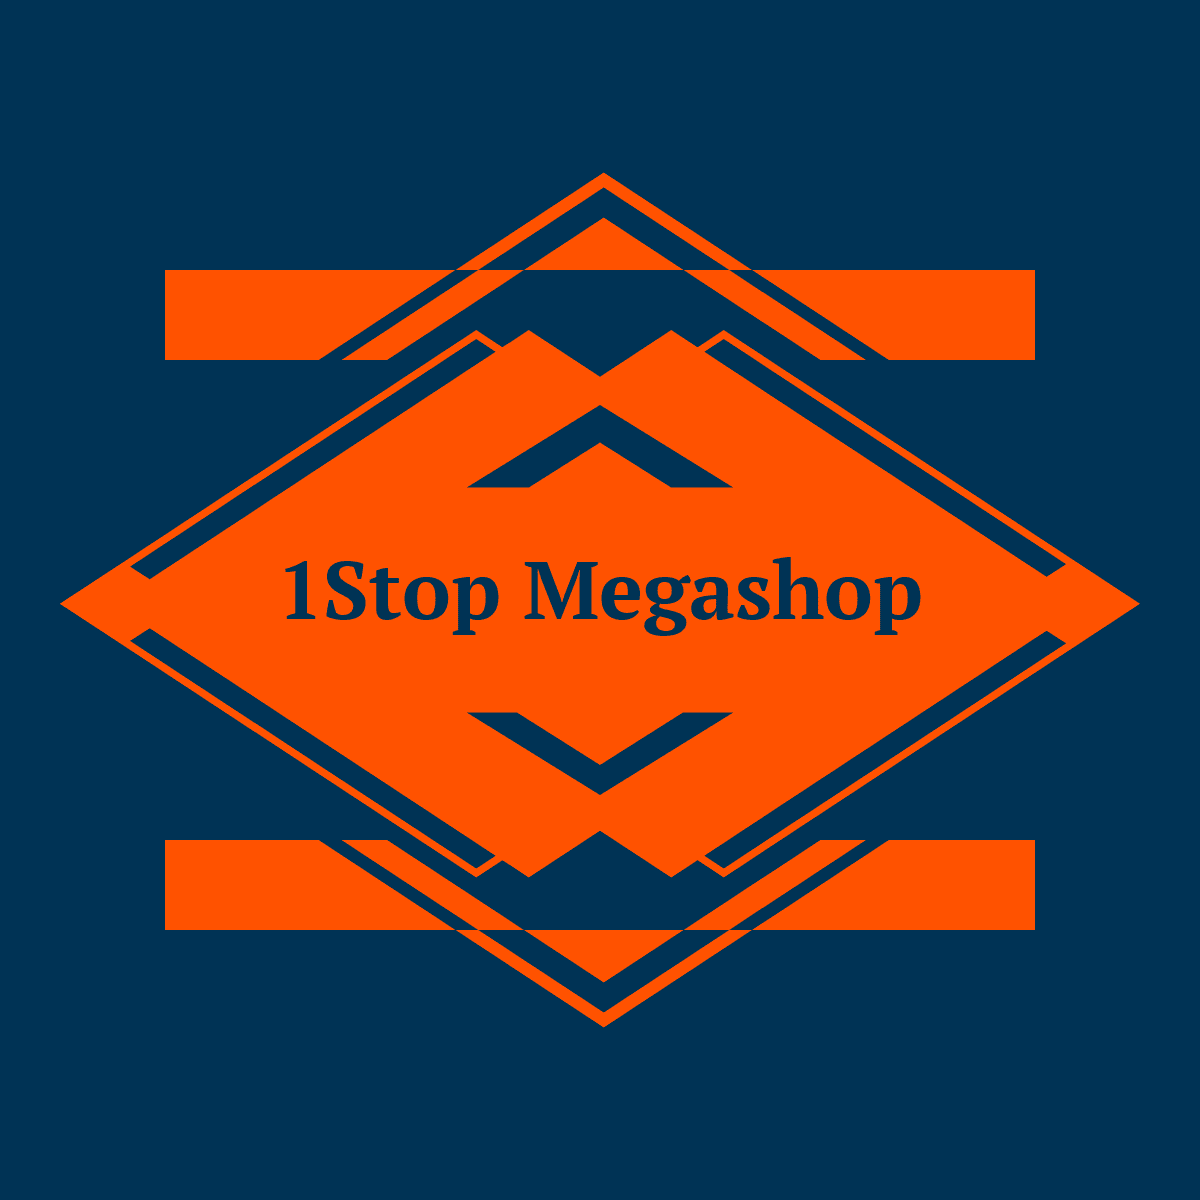 1Stop Megashop